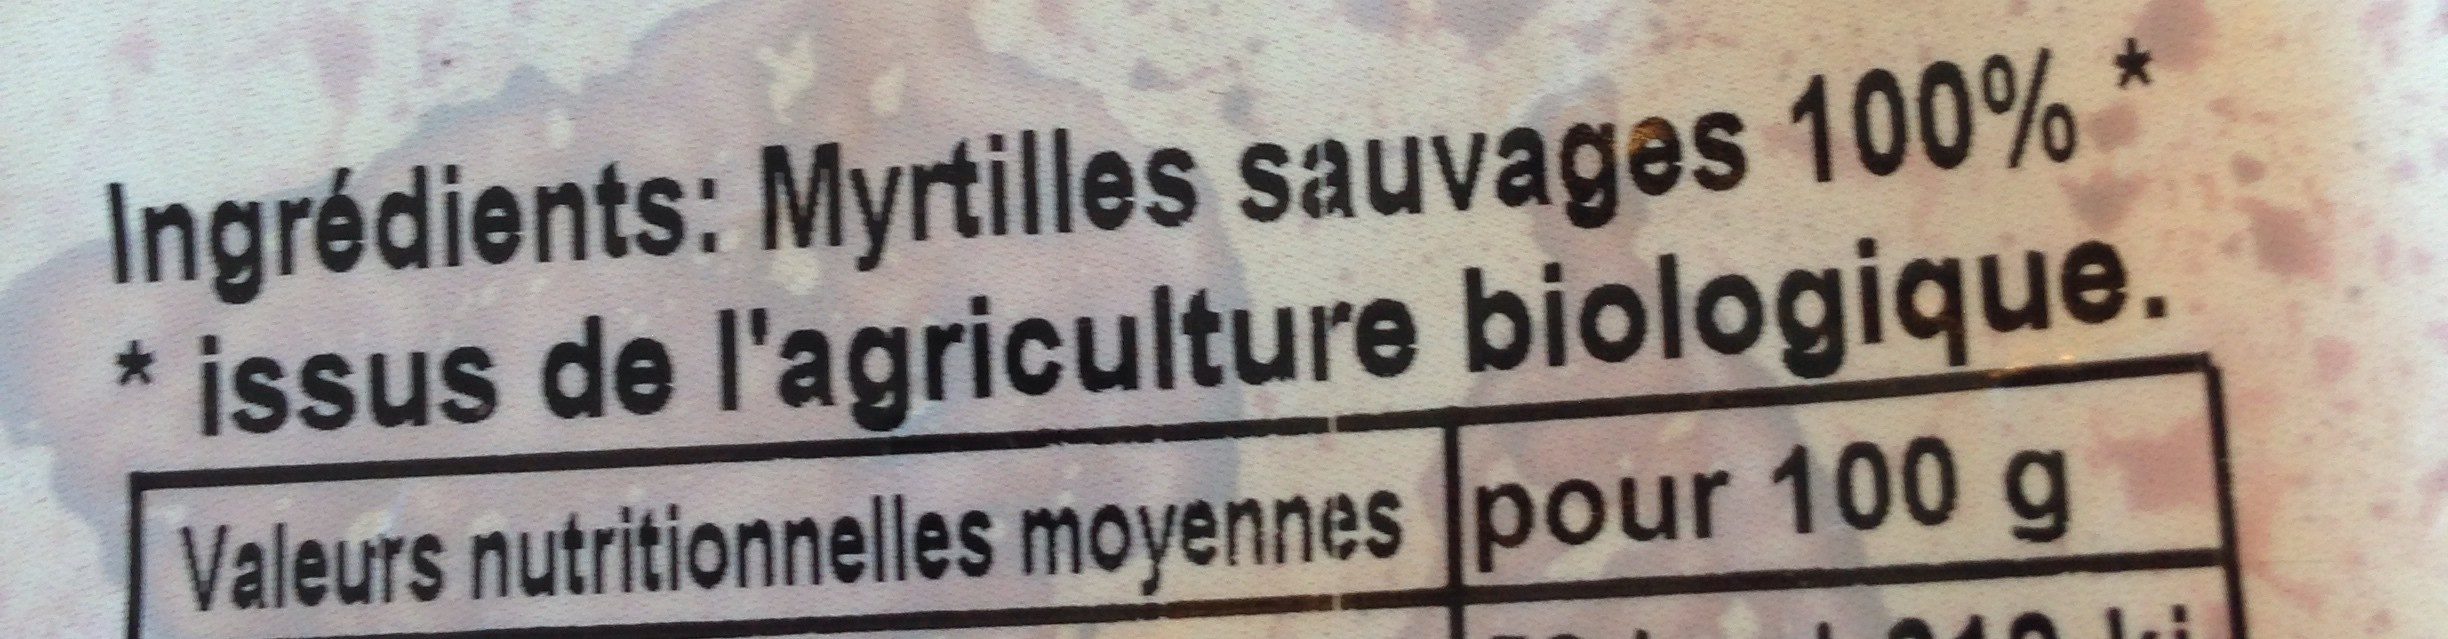 Myrtille Sauvage - Ingredients - fr